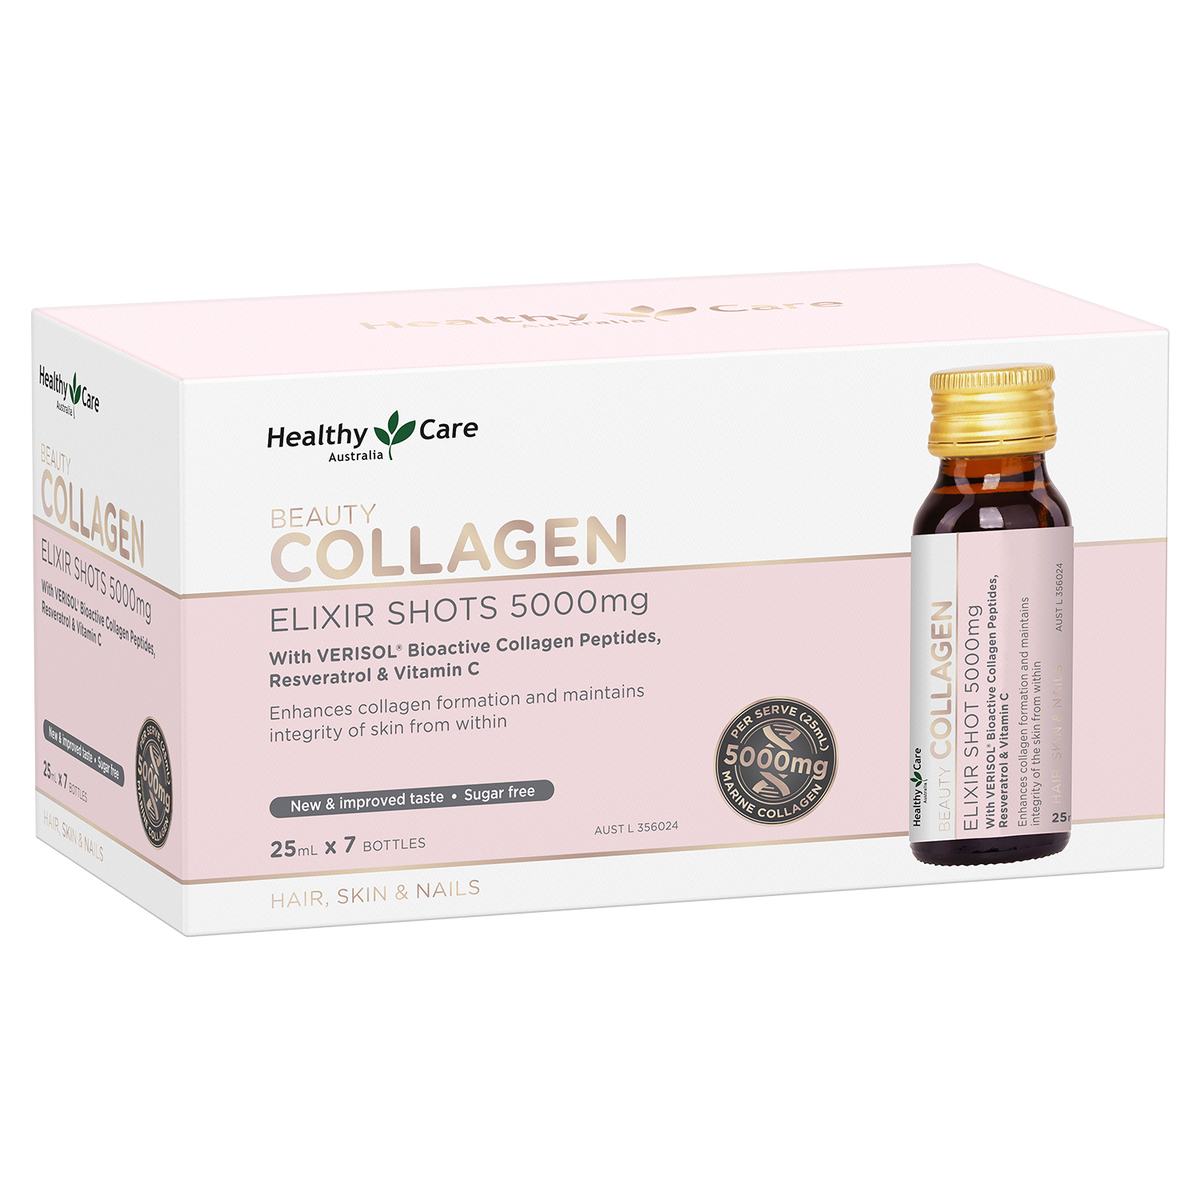 Healthy Care Beauty Collagen Elixir Shots 5,000mg 25mL x 7 bottles-Vitamins & Supplements